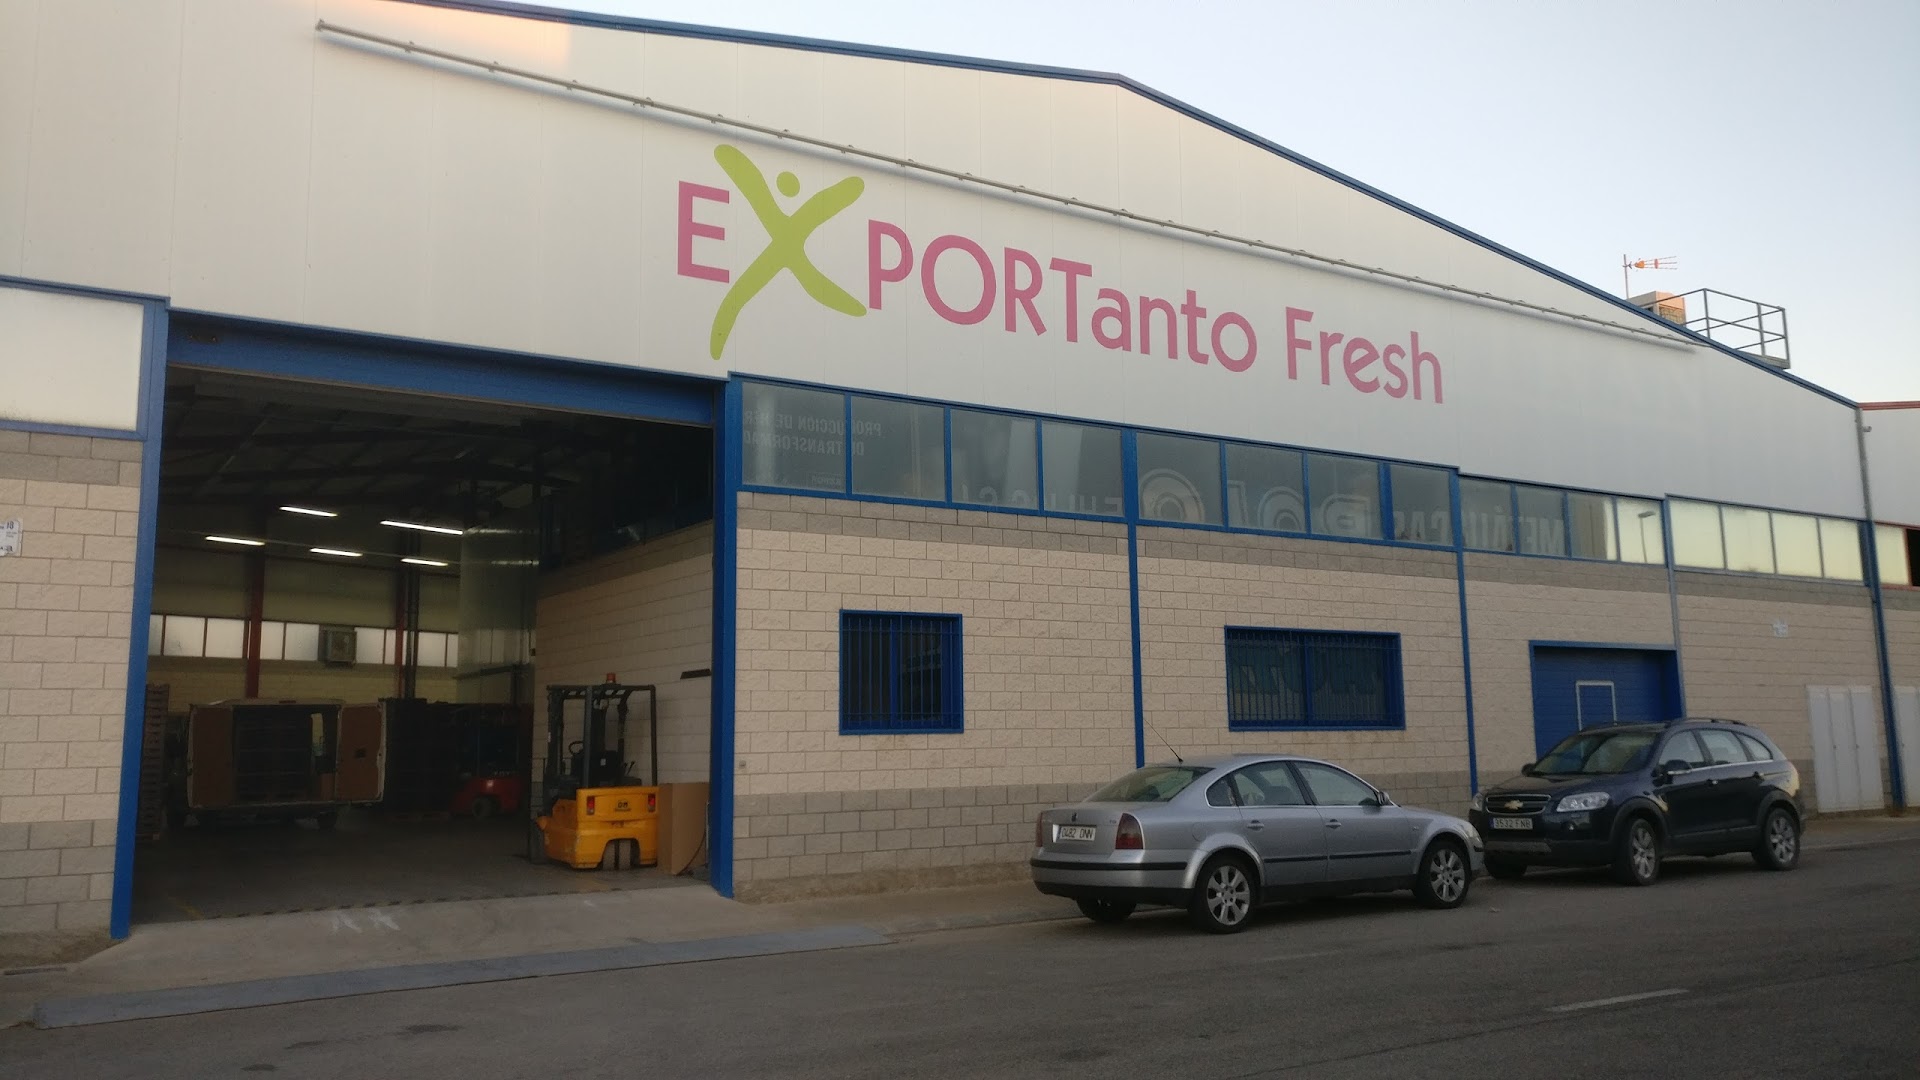 Exportanto Fresh